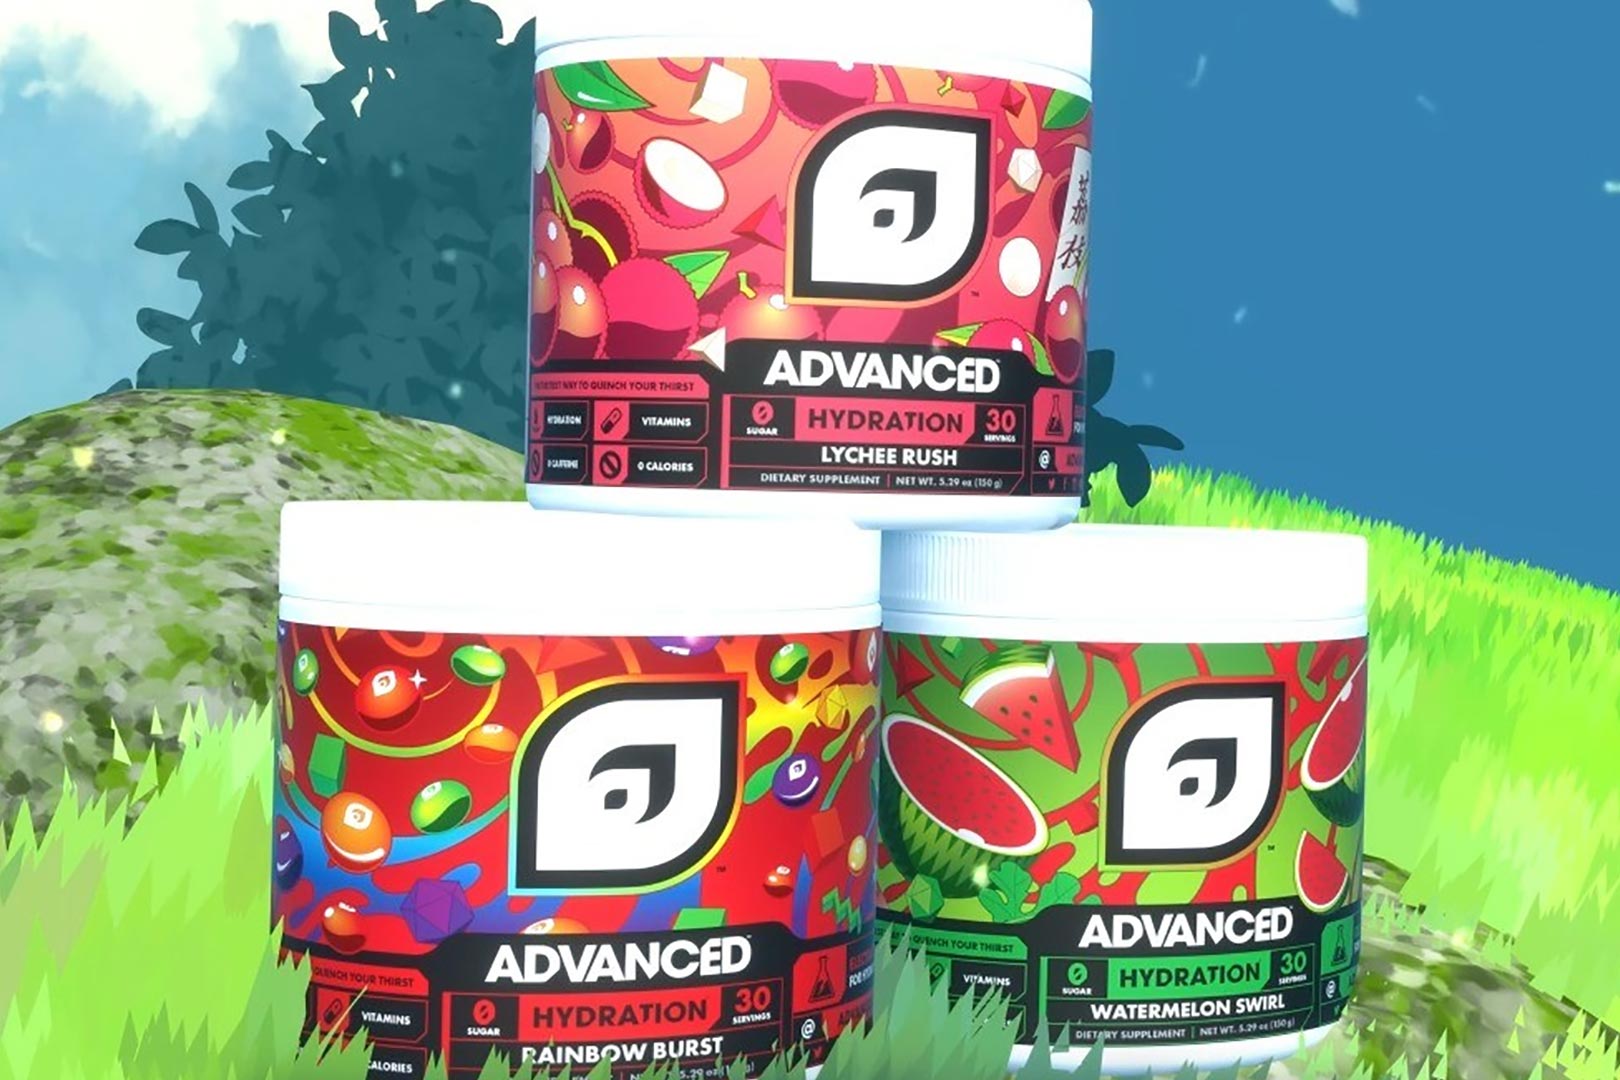 More Flavors Of Advancedgg Premium Hydration